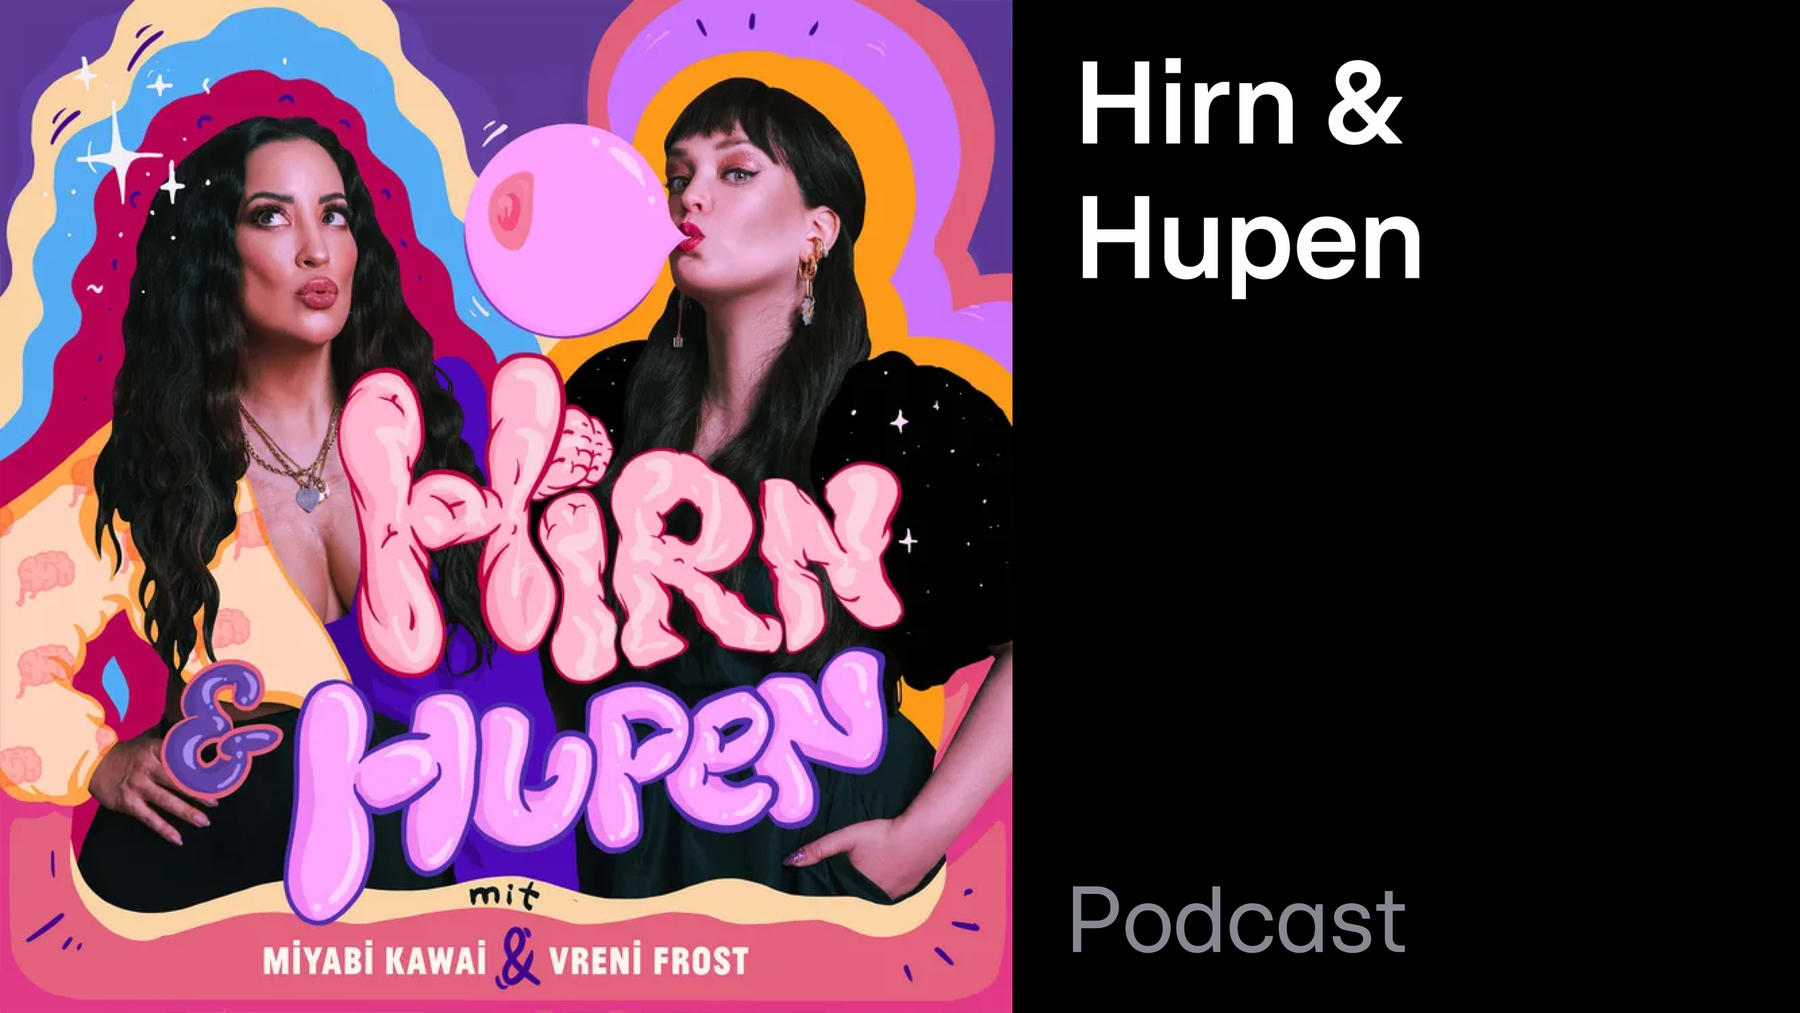 Podcast: Hirn & Hupen